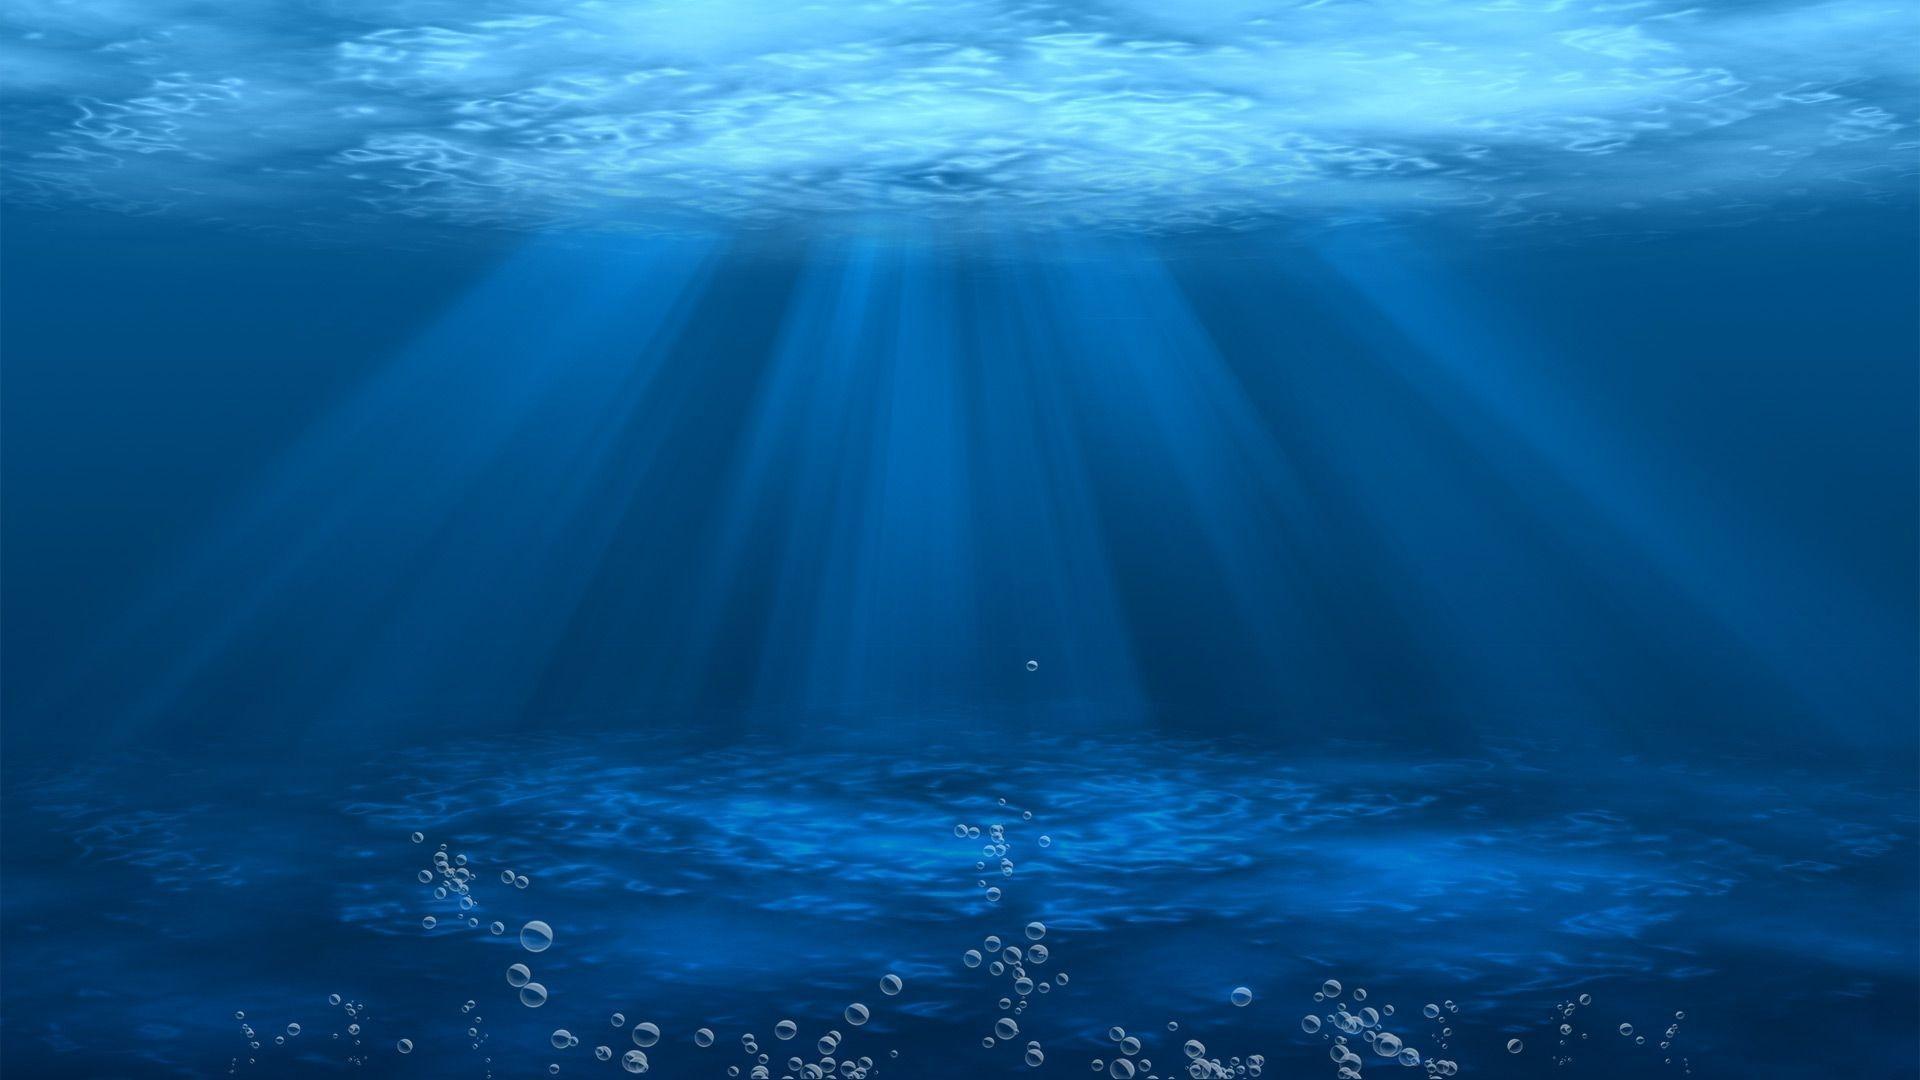 underwater animated wallpaper